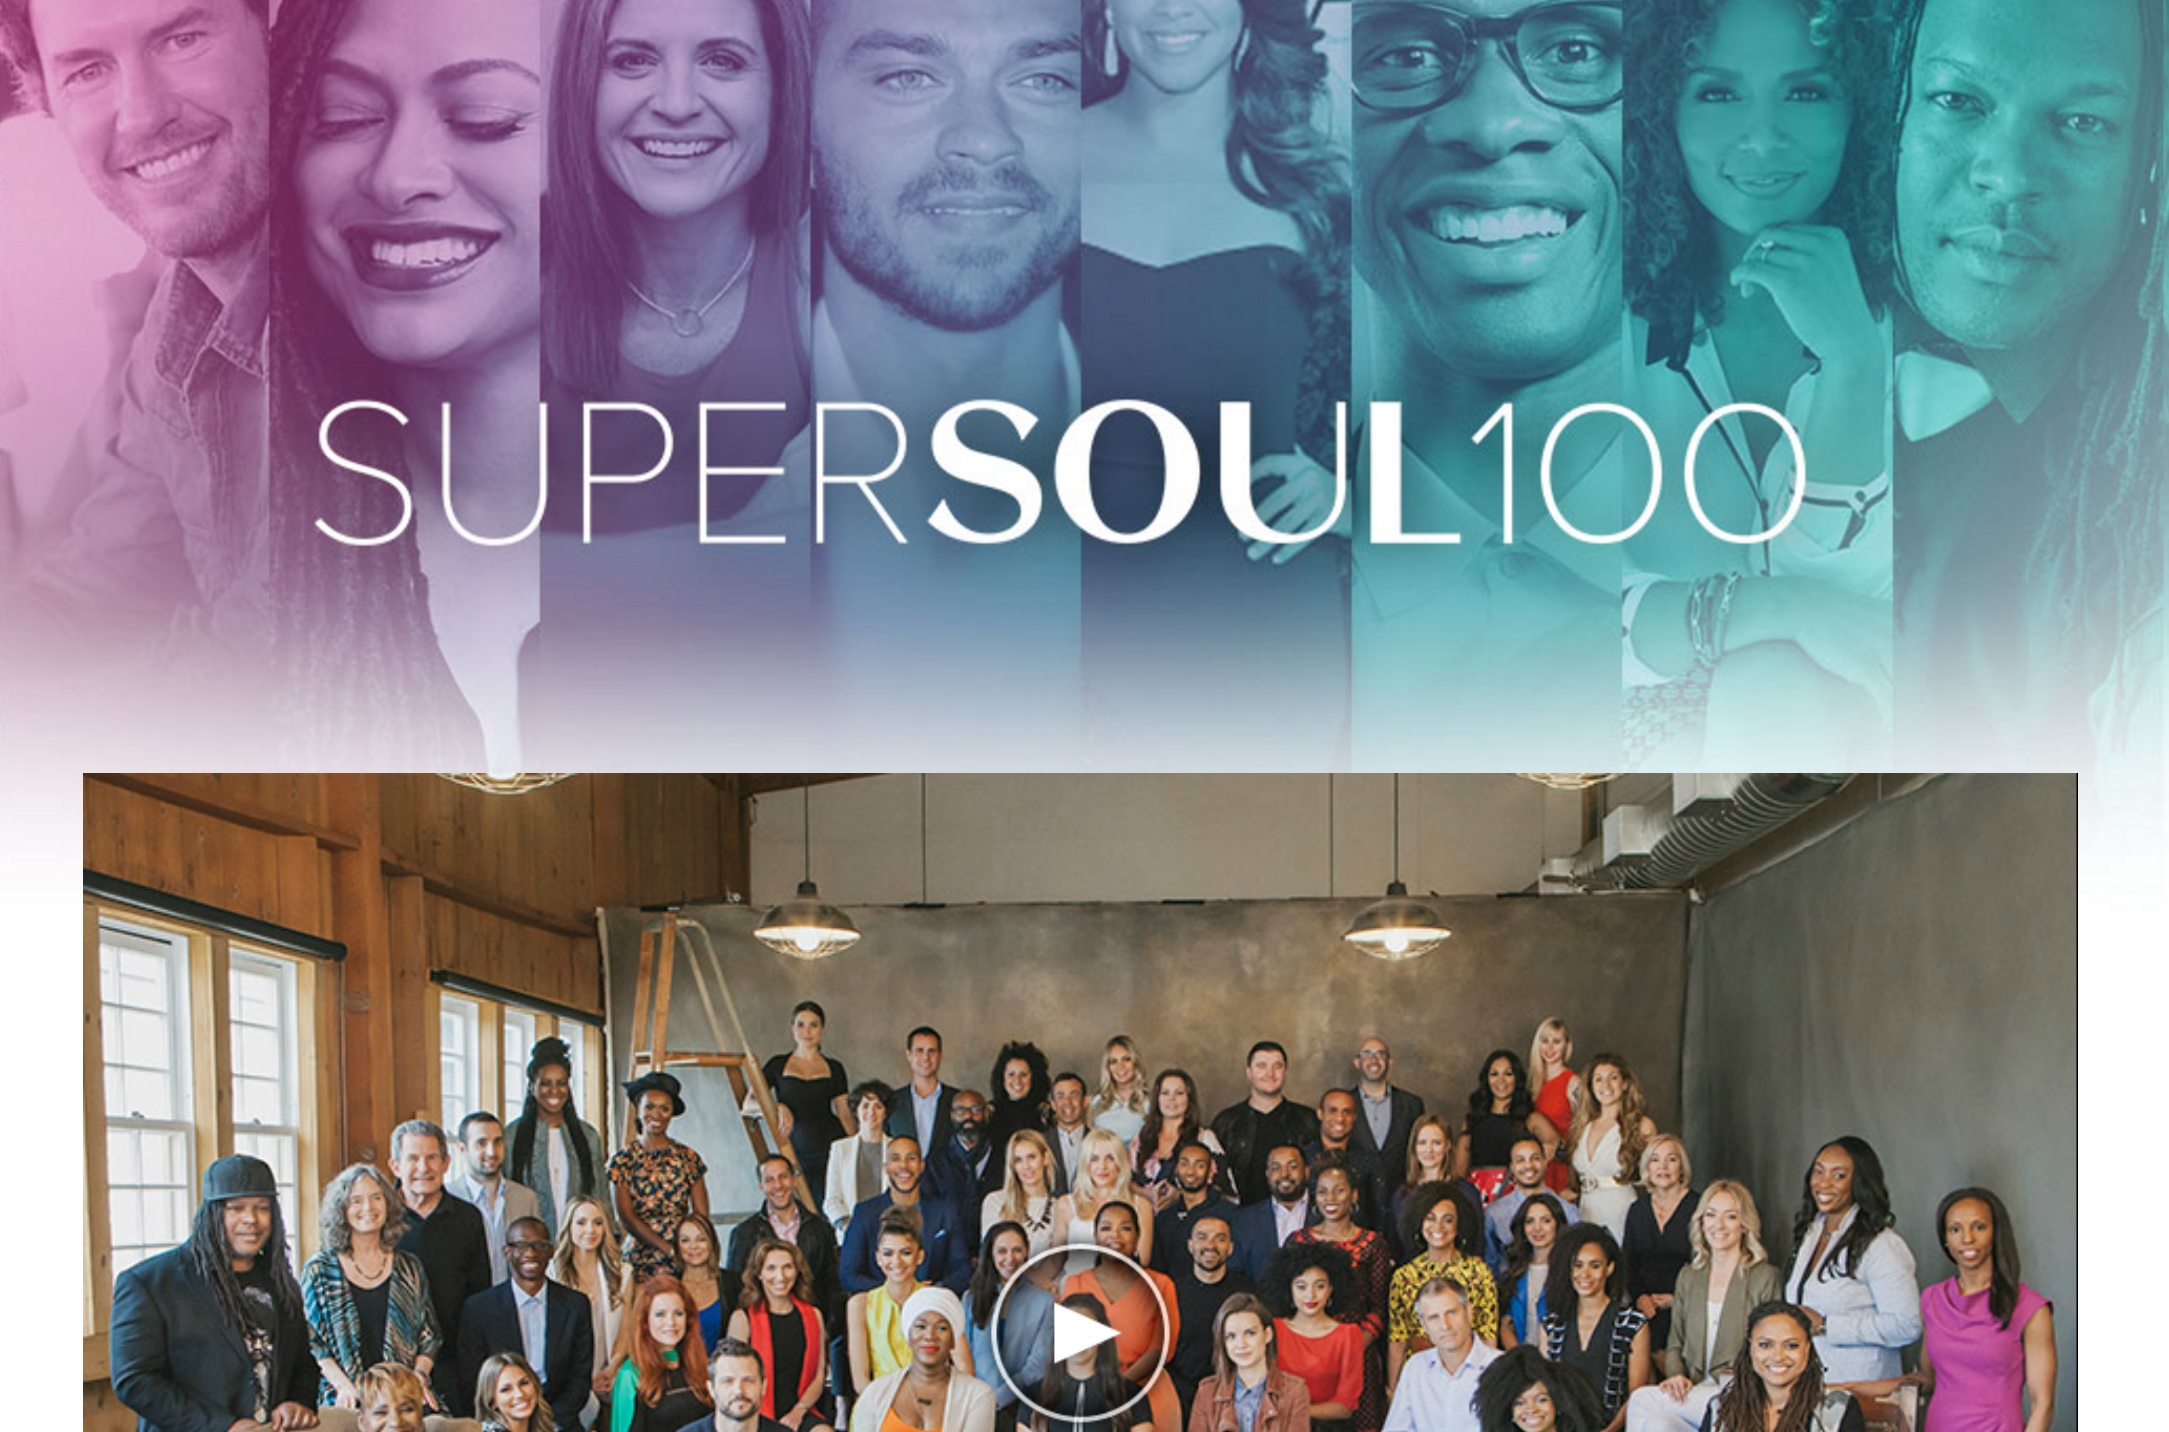 Cross Culture Ventures Co-Founder Troy Carter named to Oprah’s Super Soul 100